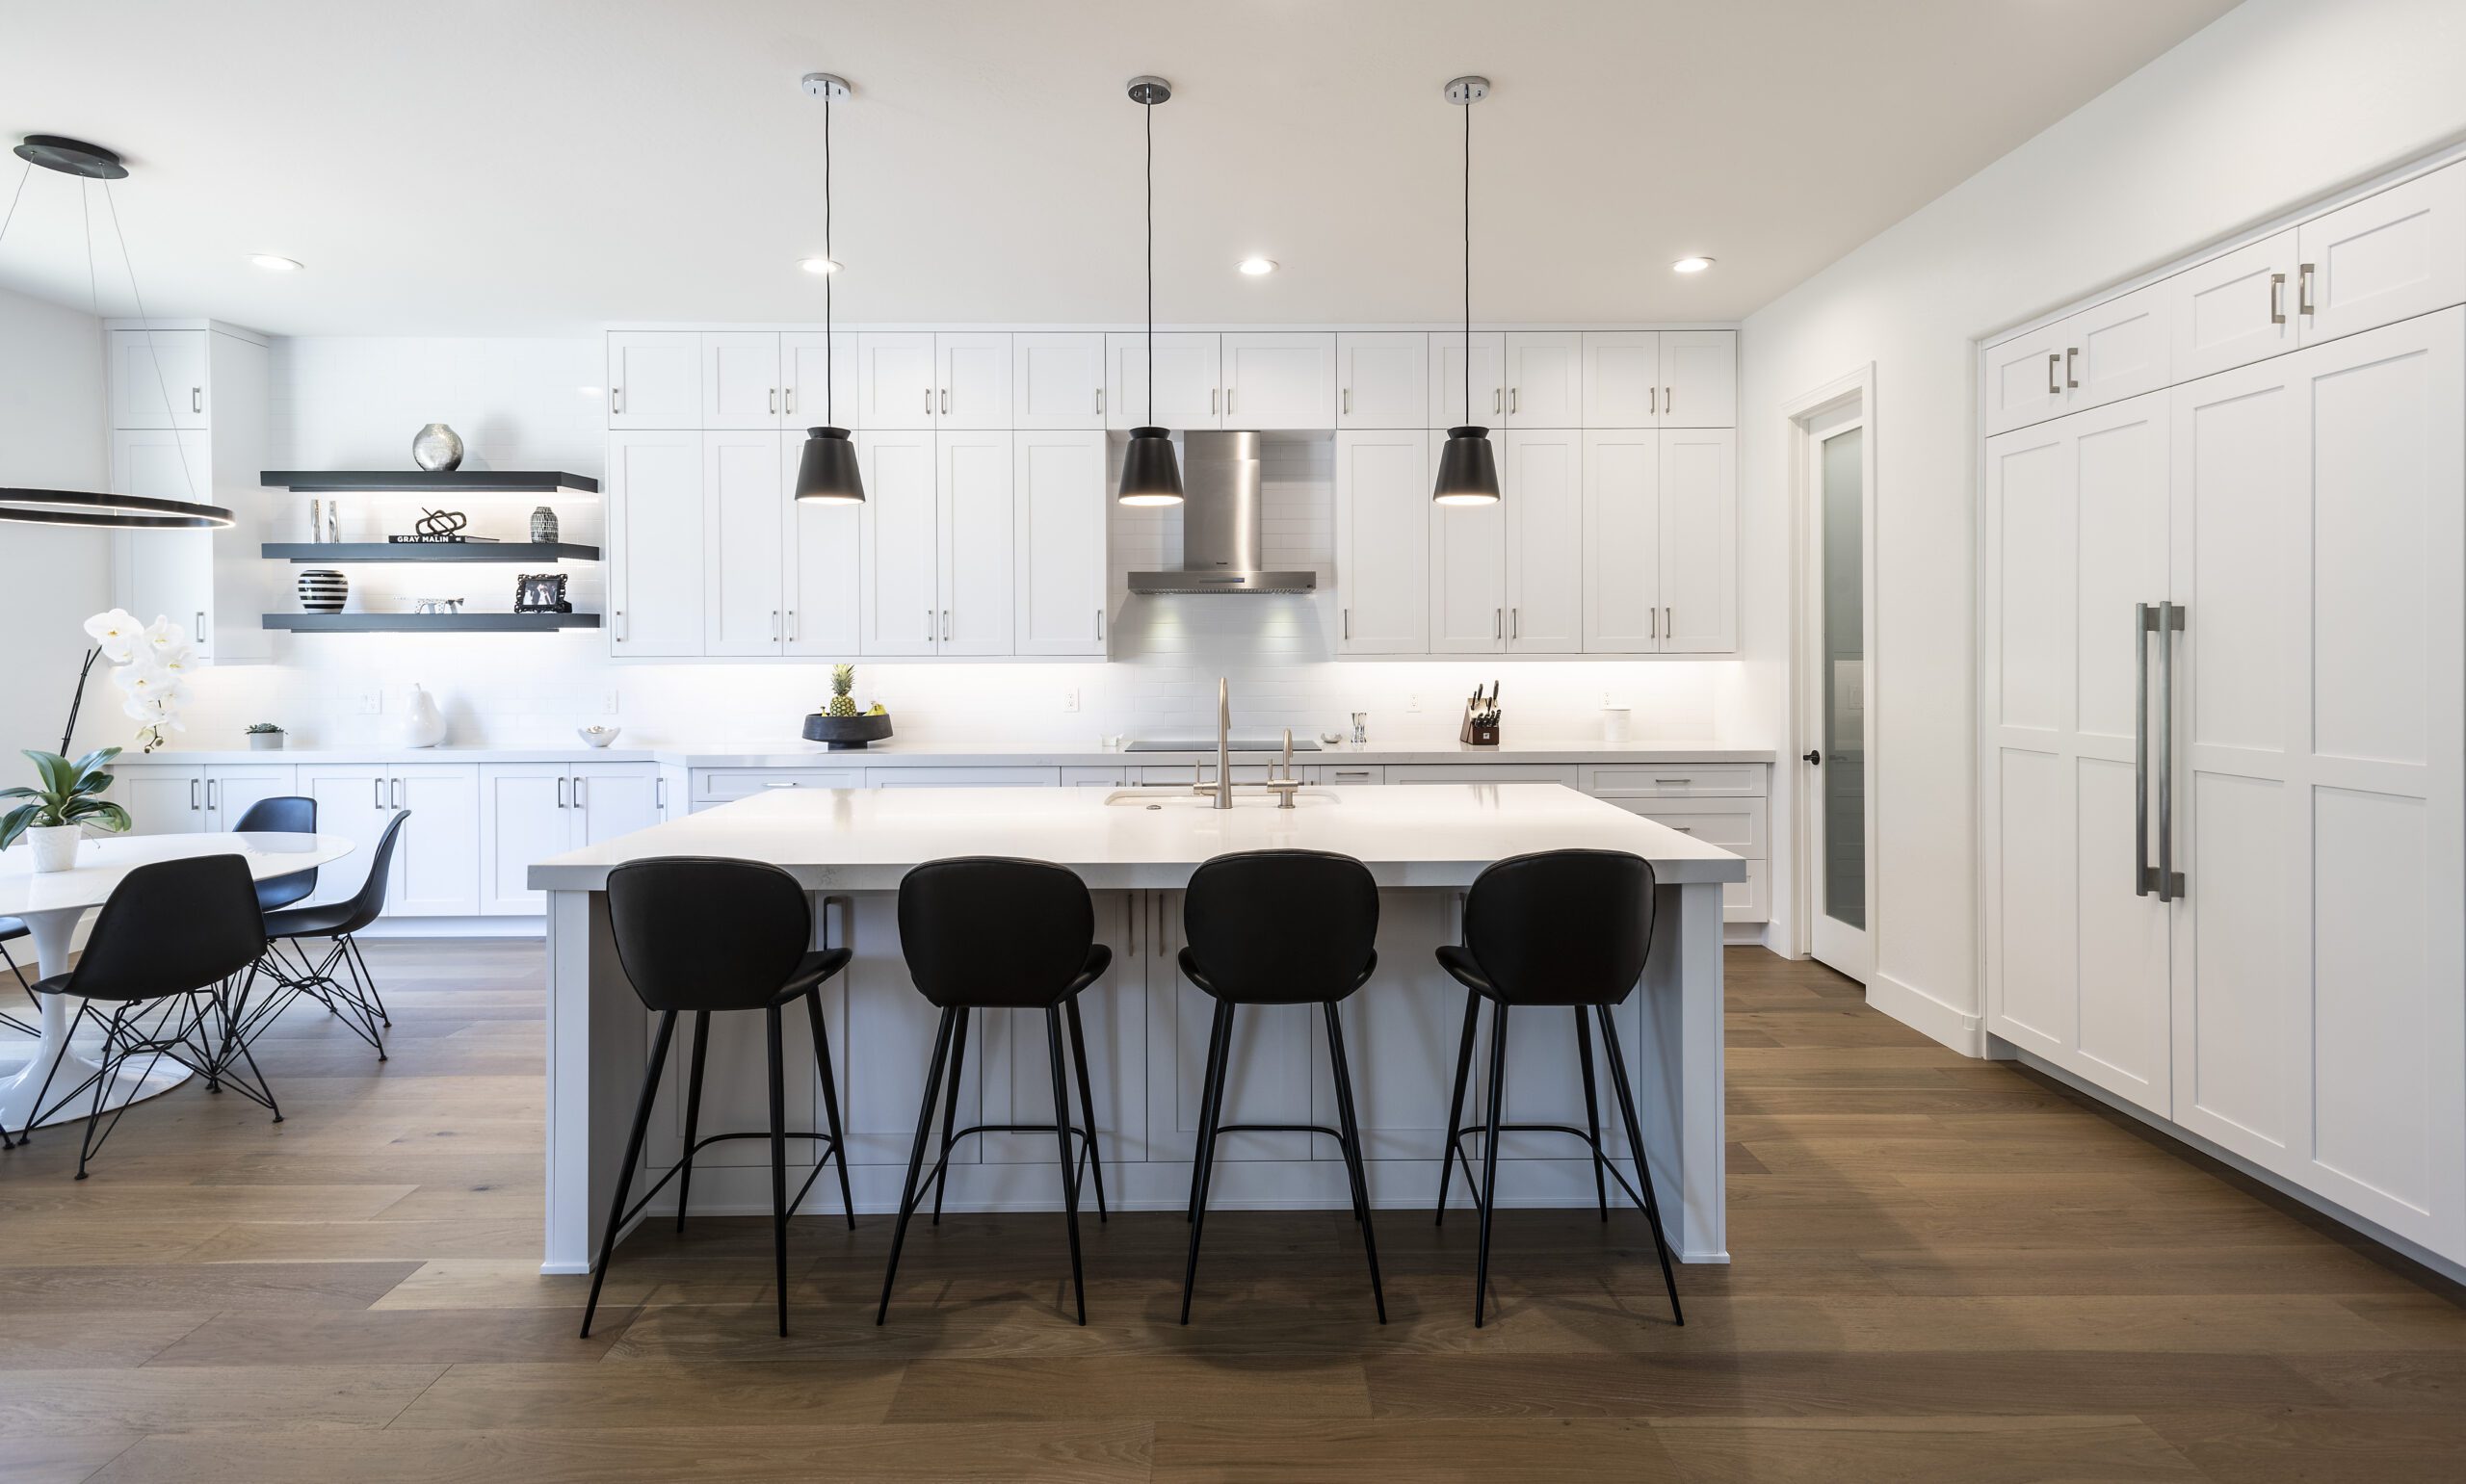 Stunning Simplicity: Minimalist Cabinet Design for Modern Arizona Homes